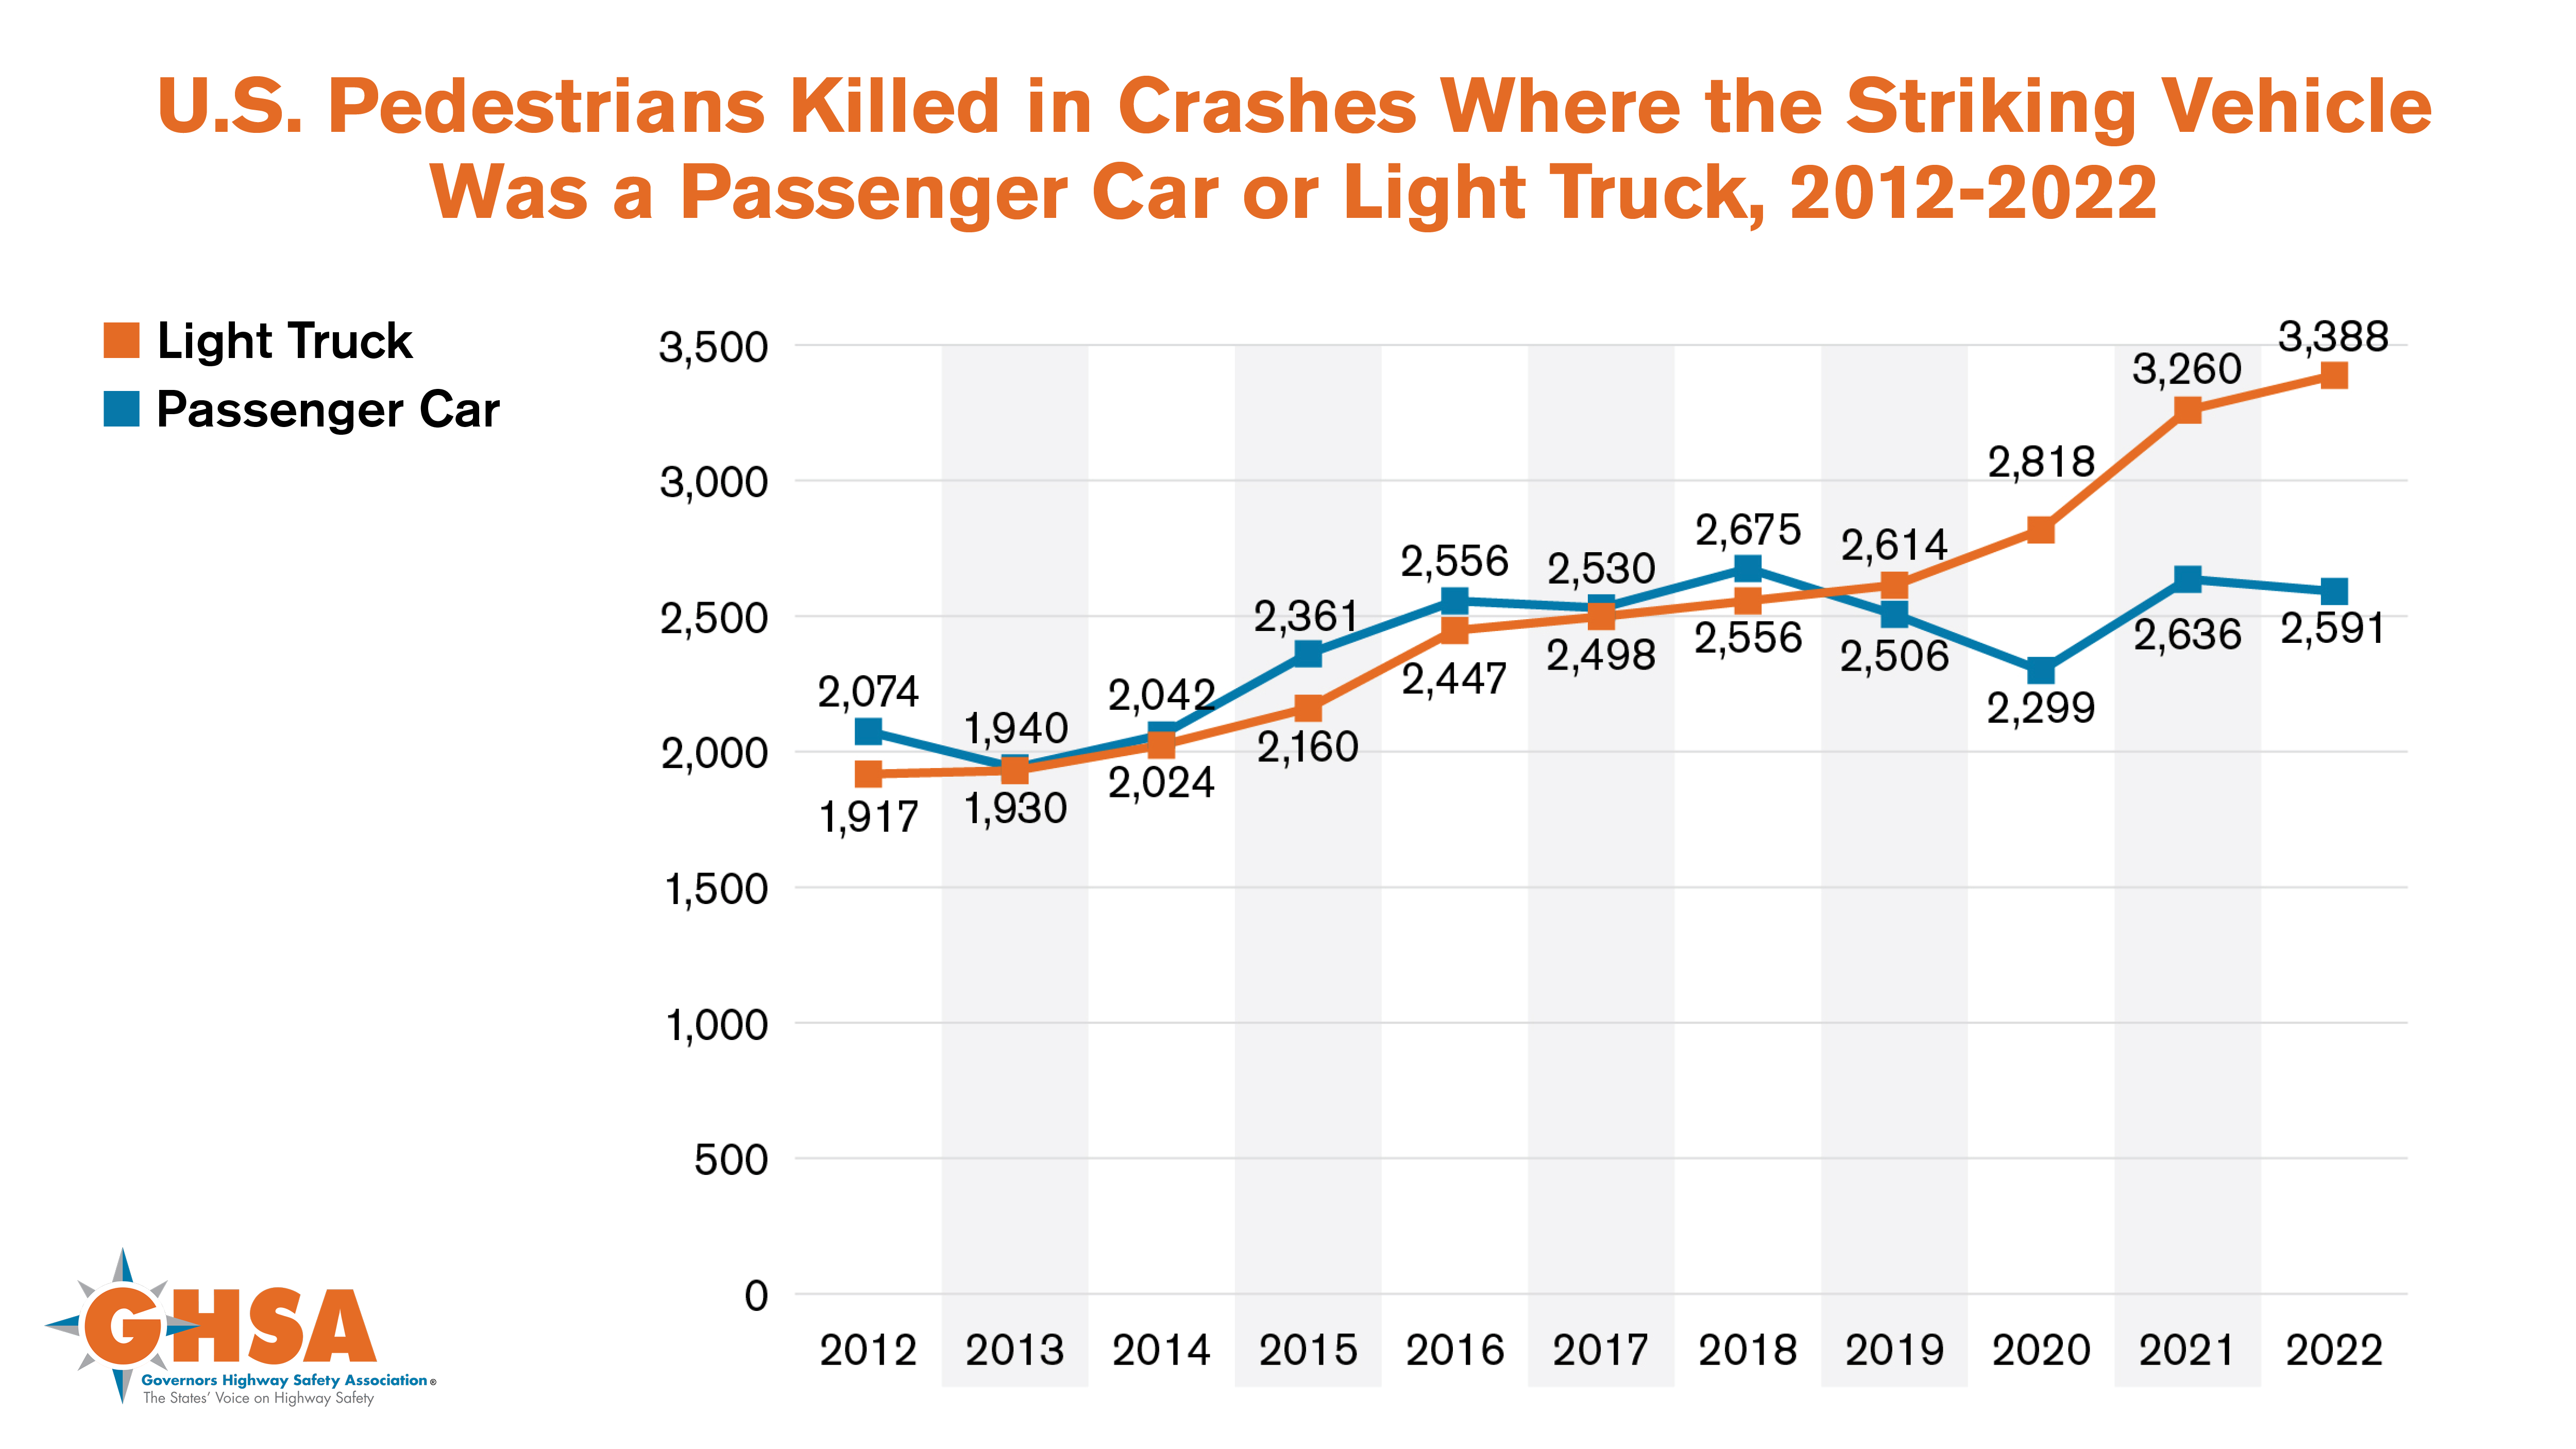 U.S. Pedestrians Killed in Crashes Where the Striking Vehicle Was a Passenger Car vs. Light Truck, 2012-2022